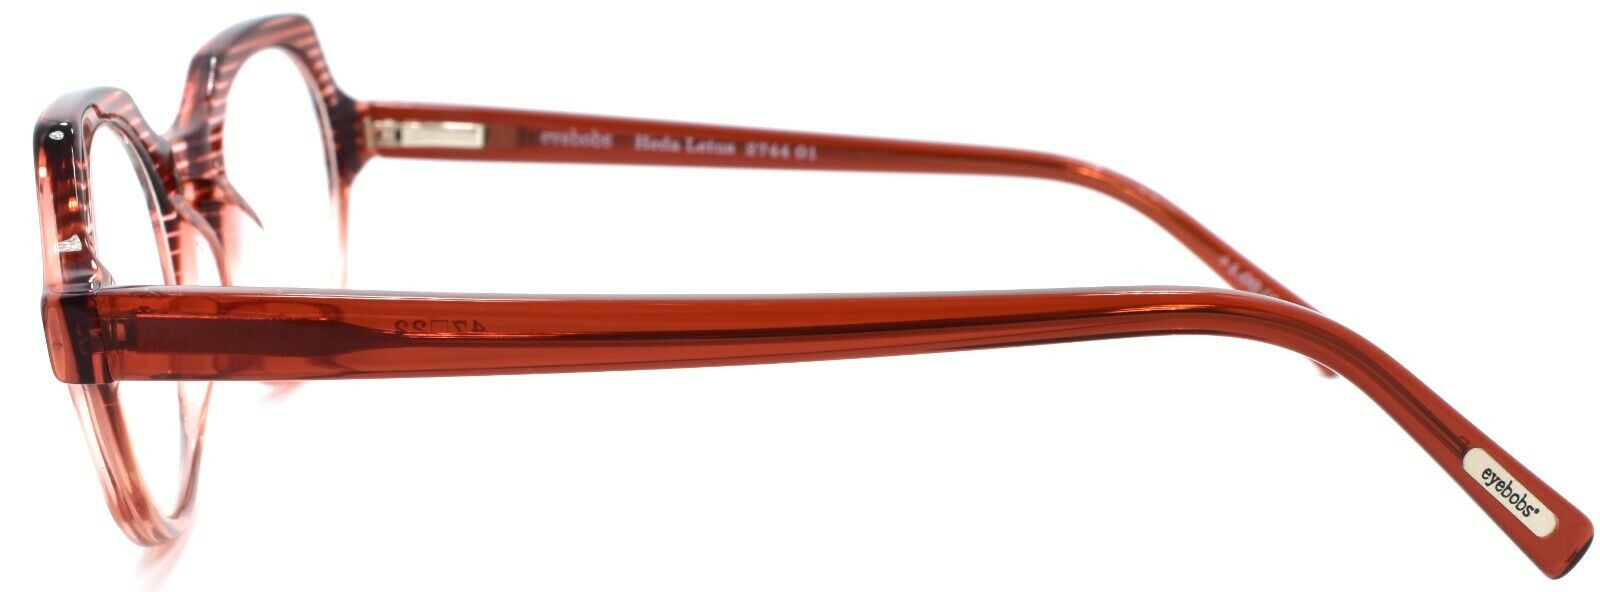 3-Eyebobs Heda Letus 2744 01 Women's Reading Glasses Red / Pink Stripes +2.50-842754159753-IKSpecs